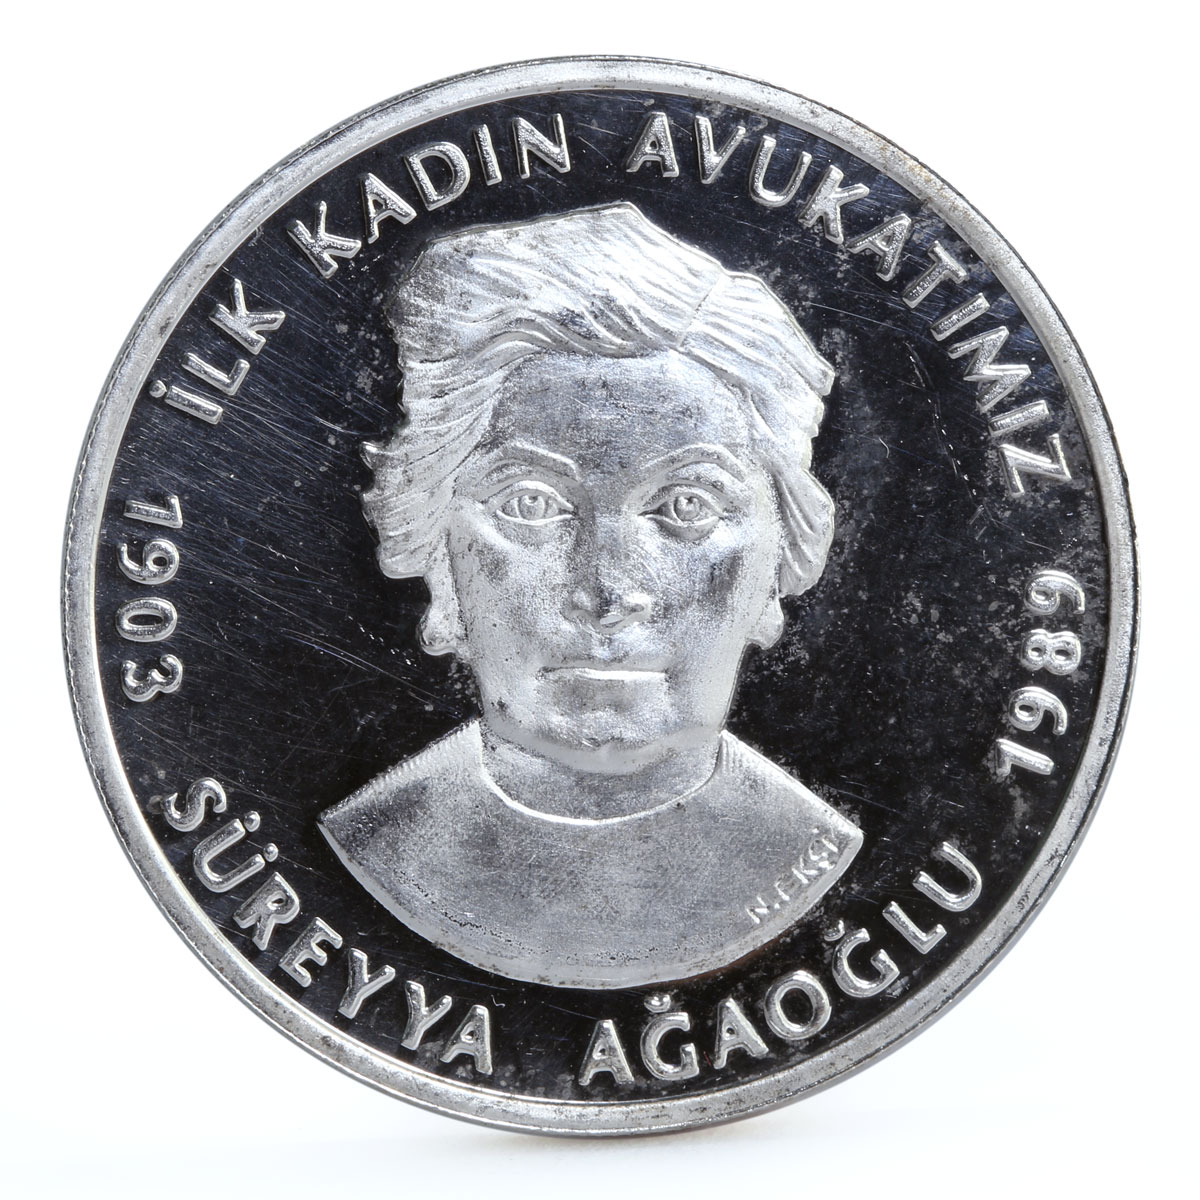 Turkey 15000000 lira Poet and Writer Sureyya Agaoglu Literature silver coin 2003